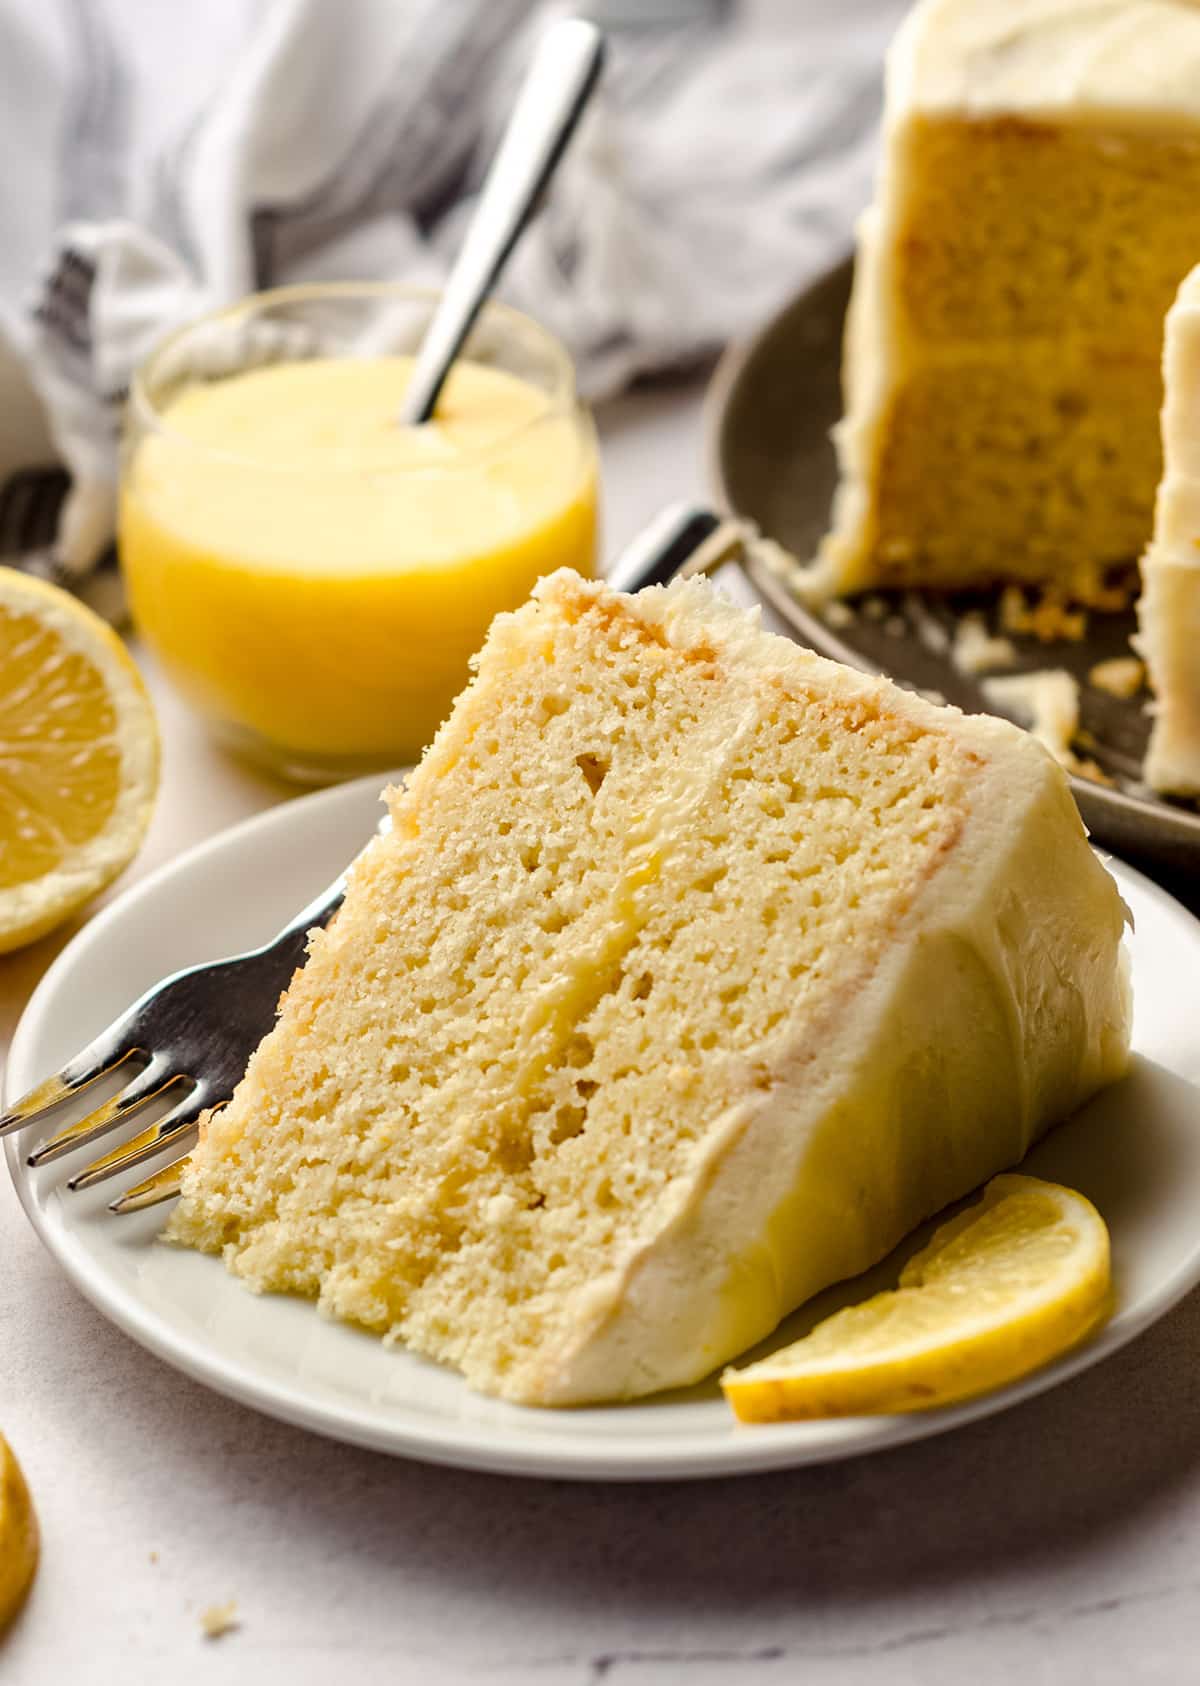 A slice of lemon cake with a lemon curd filling.